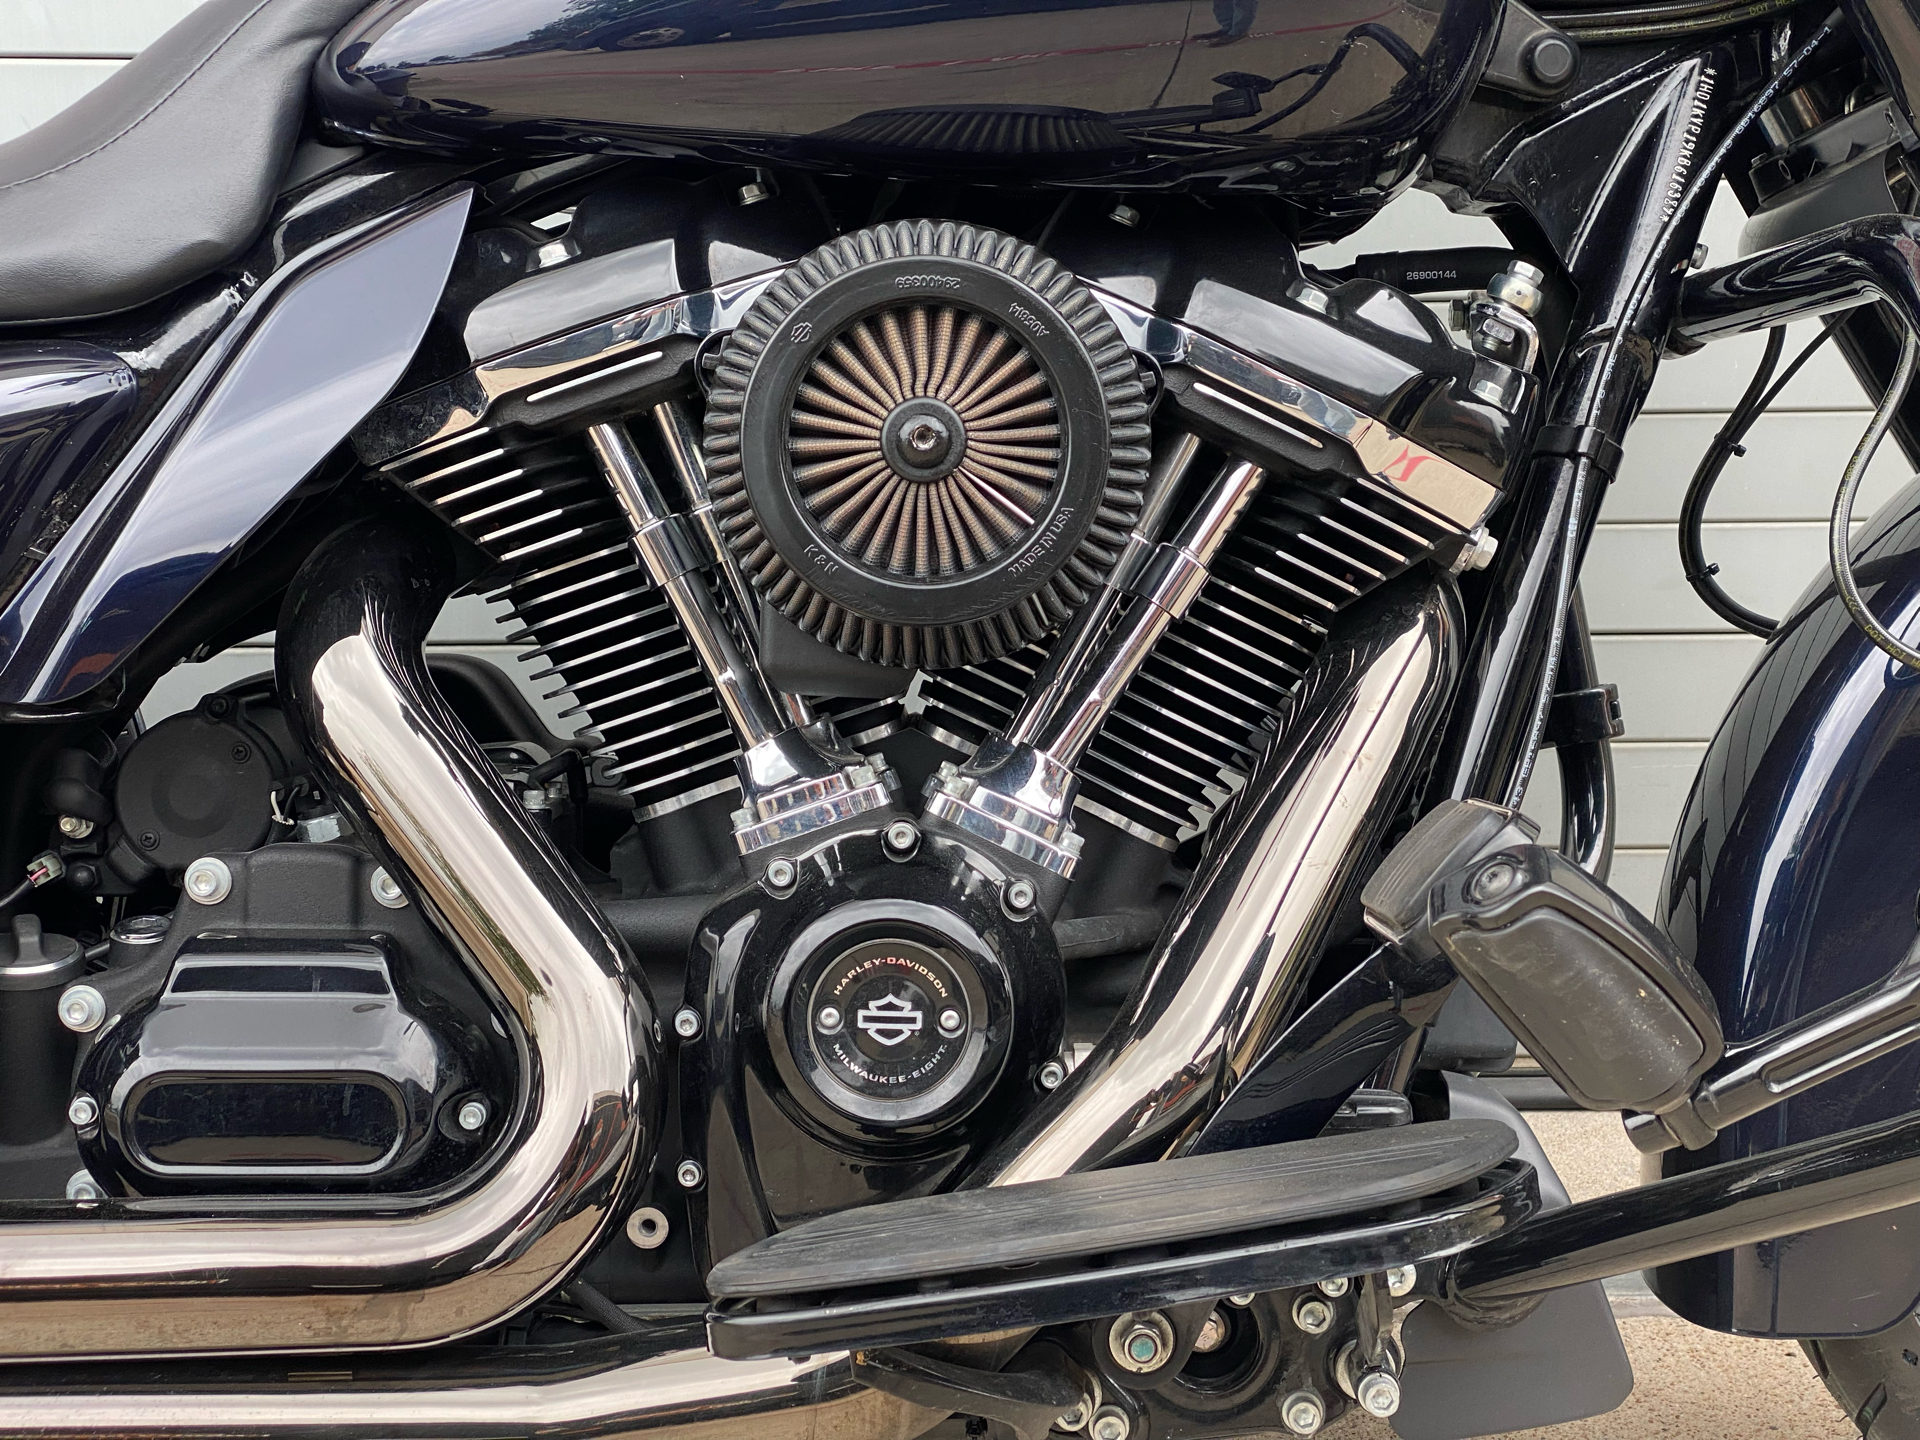 2019 Harley-Davidson Road King® Special in Grand Prairie, Texas - Photo 6